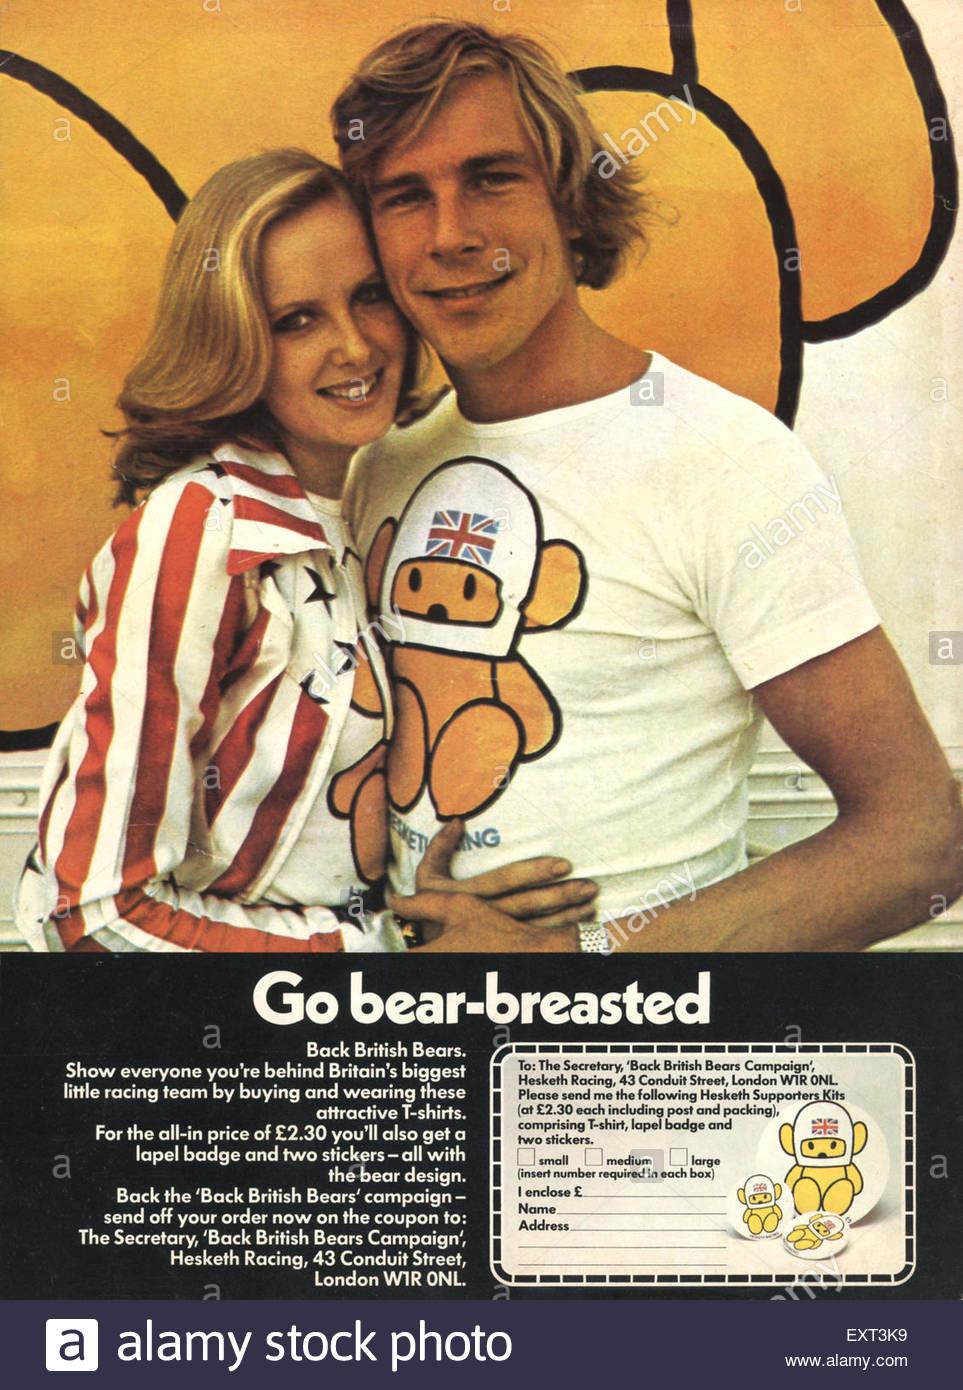 1970s Uk, Hesketh racing magazine advert with James Hunt and a girl.